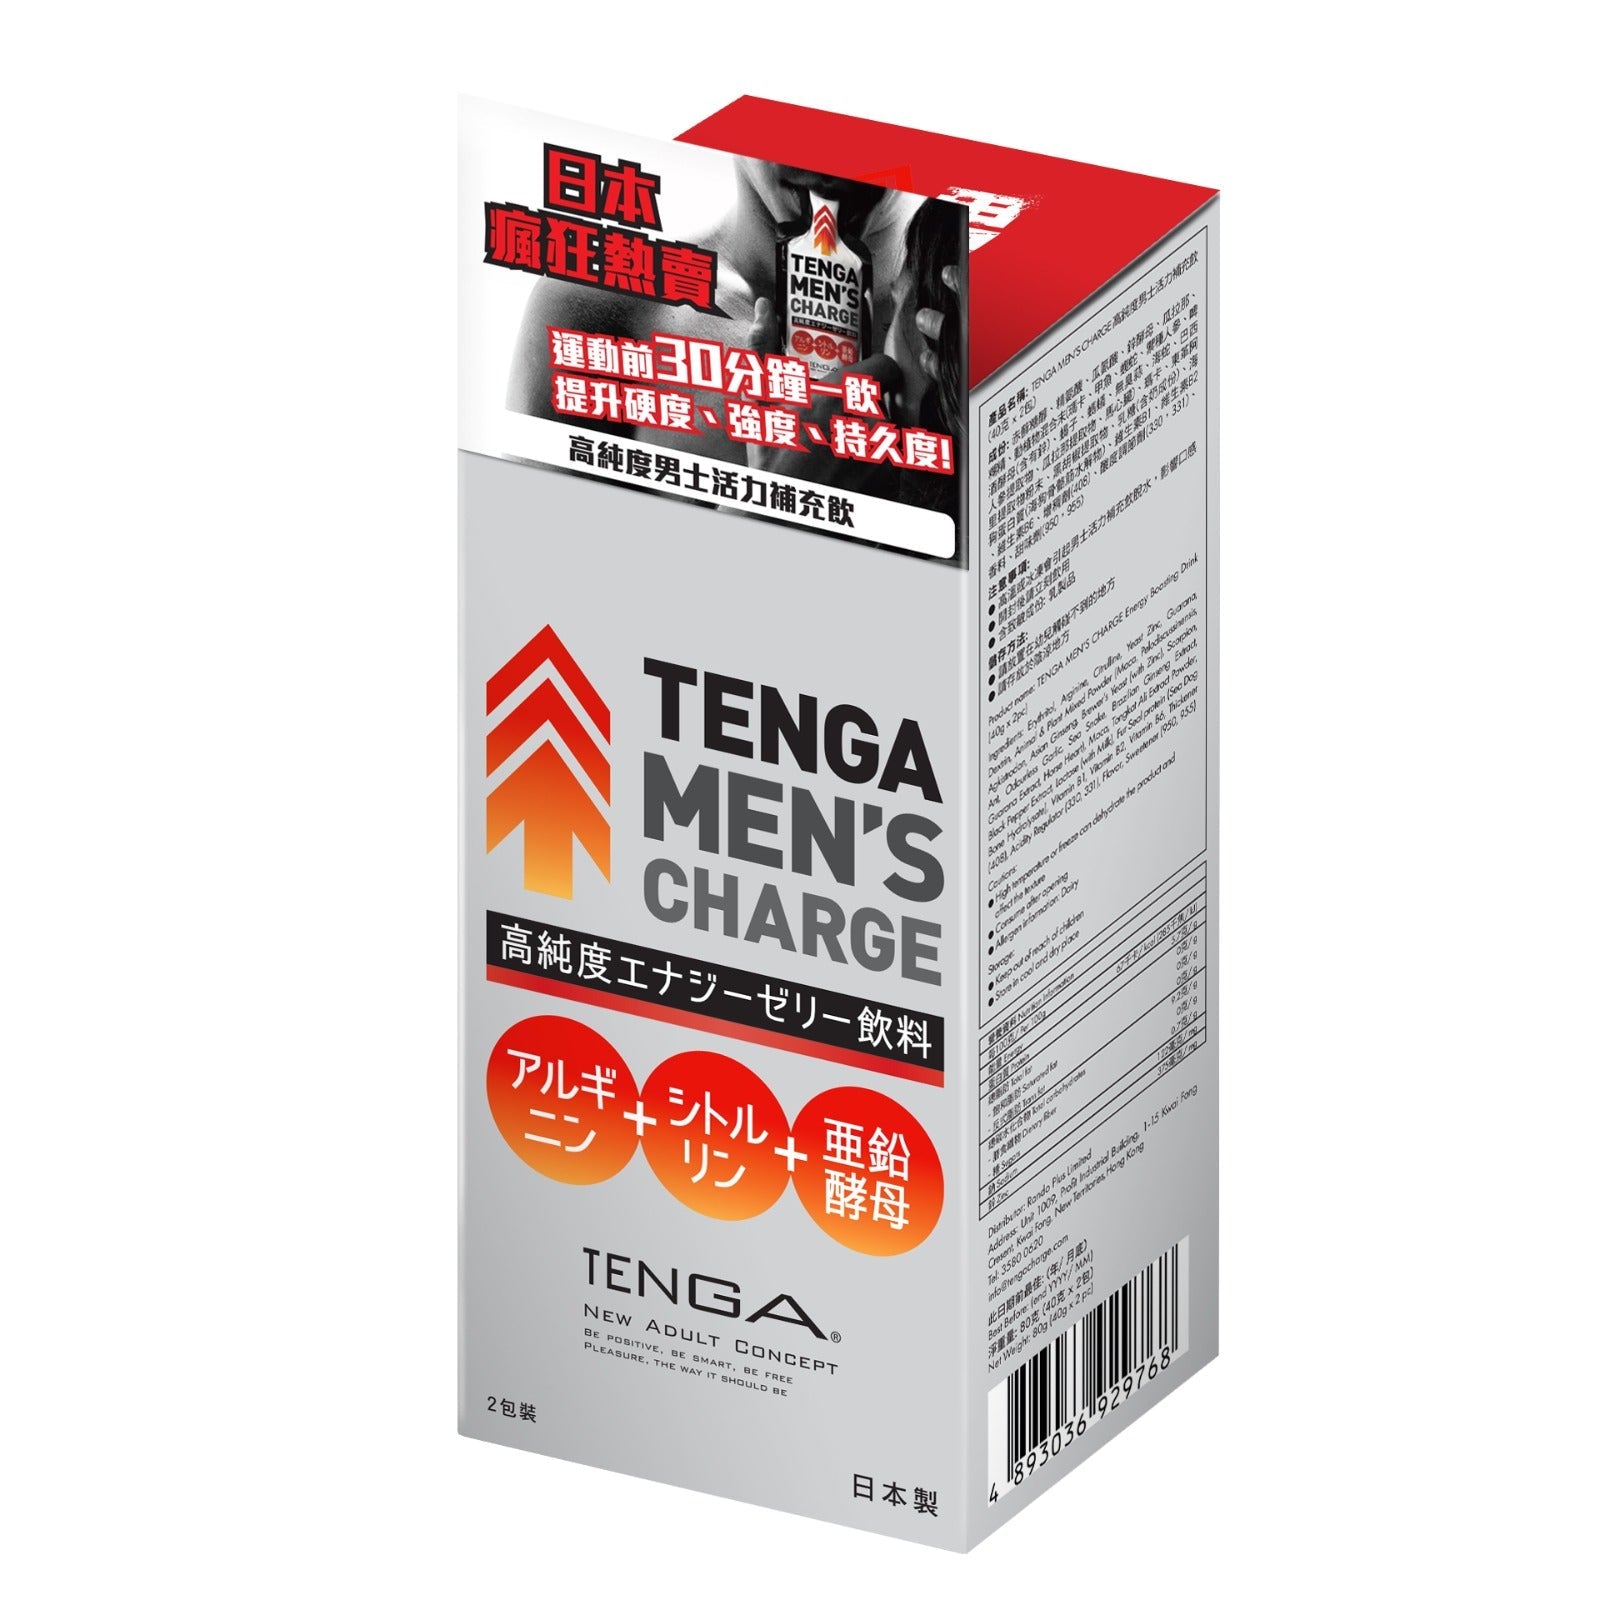 TENGA MEN'S CHARGE 高純度男士活力補充飲 - tengacharge